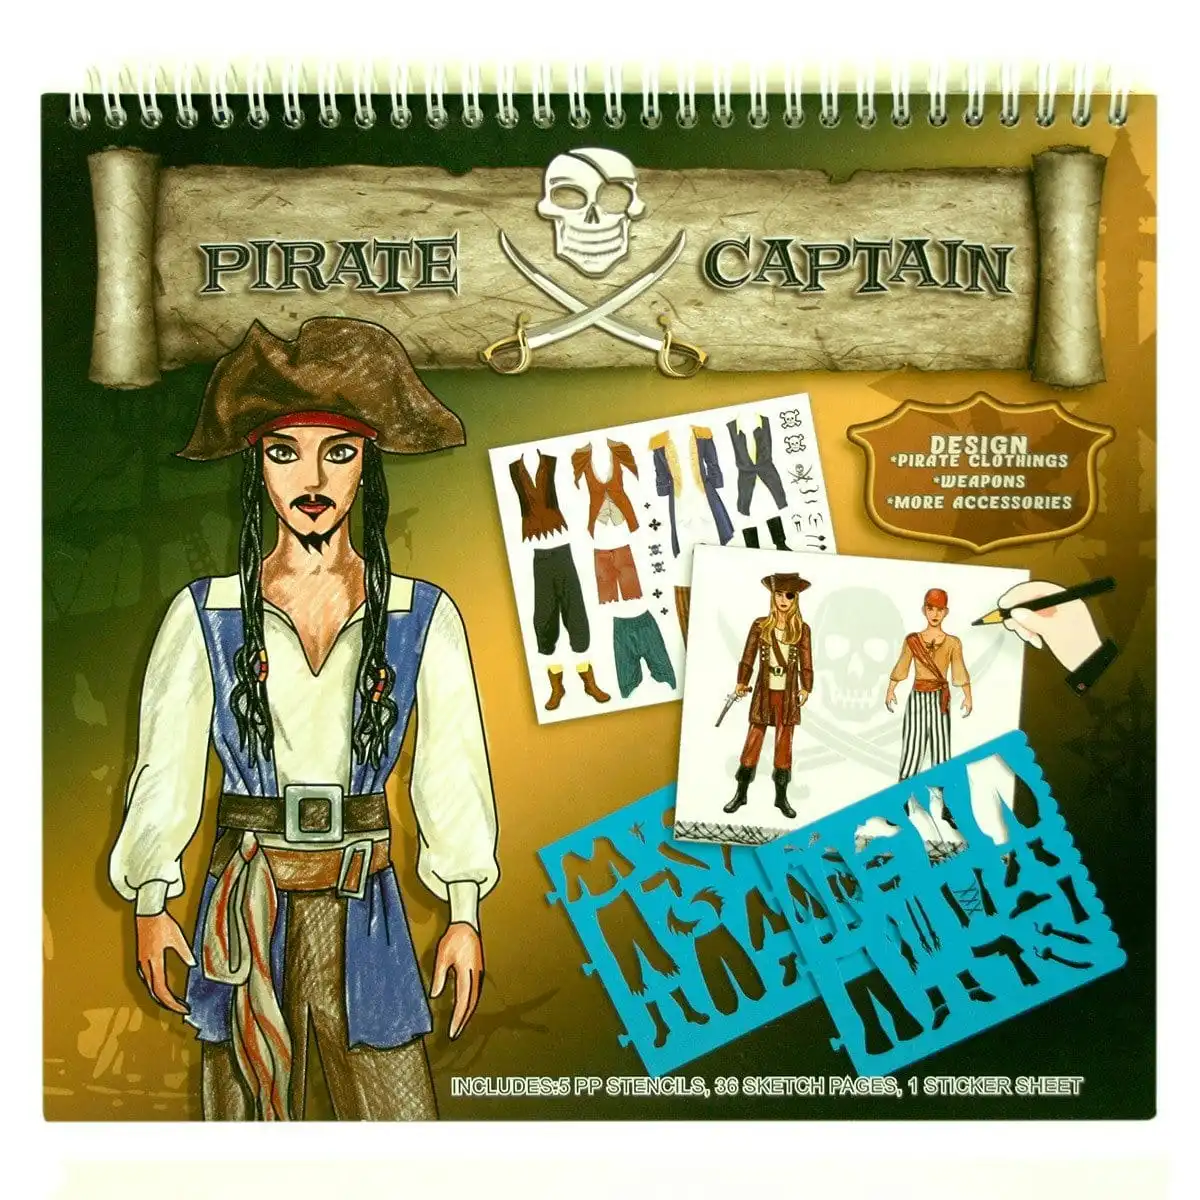 Promotional Pirate Captain Stencil Art Portfolio